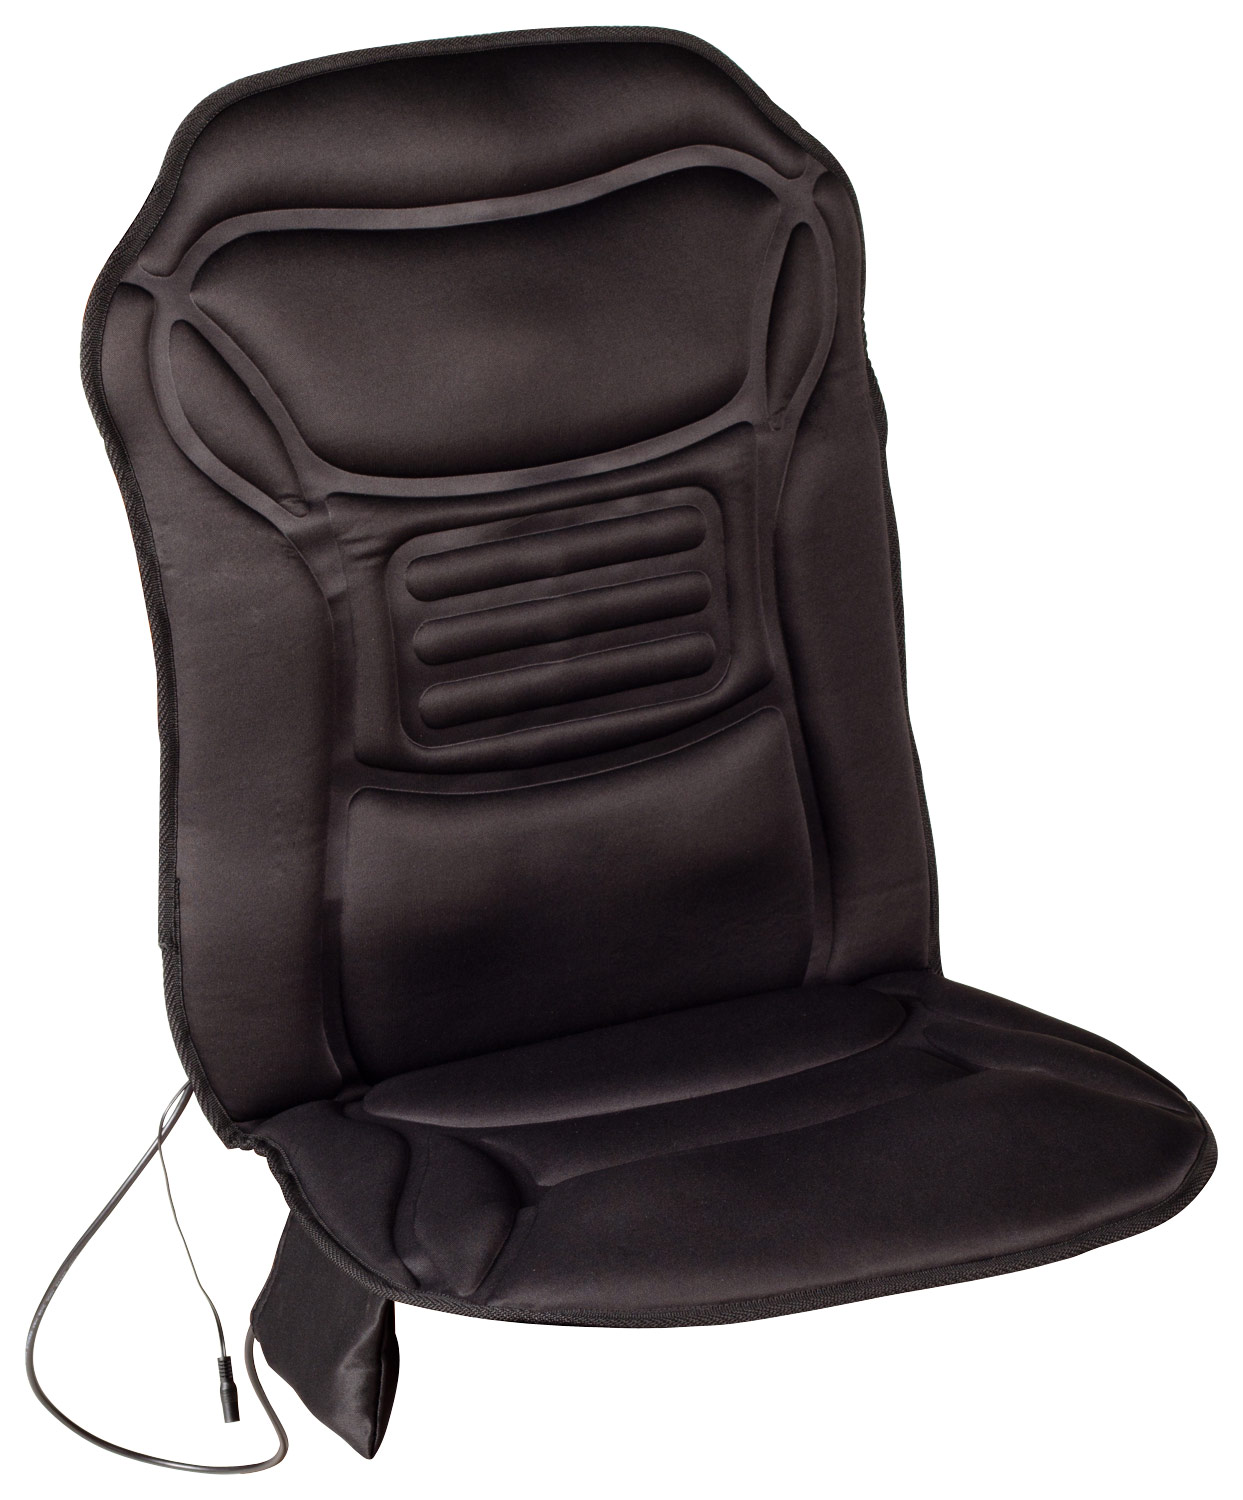  Comfort Products Inc. - Heated Massage Seat Cushion - Black